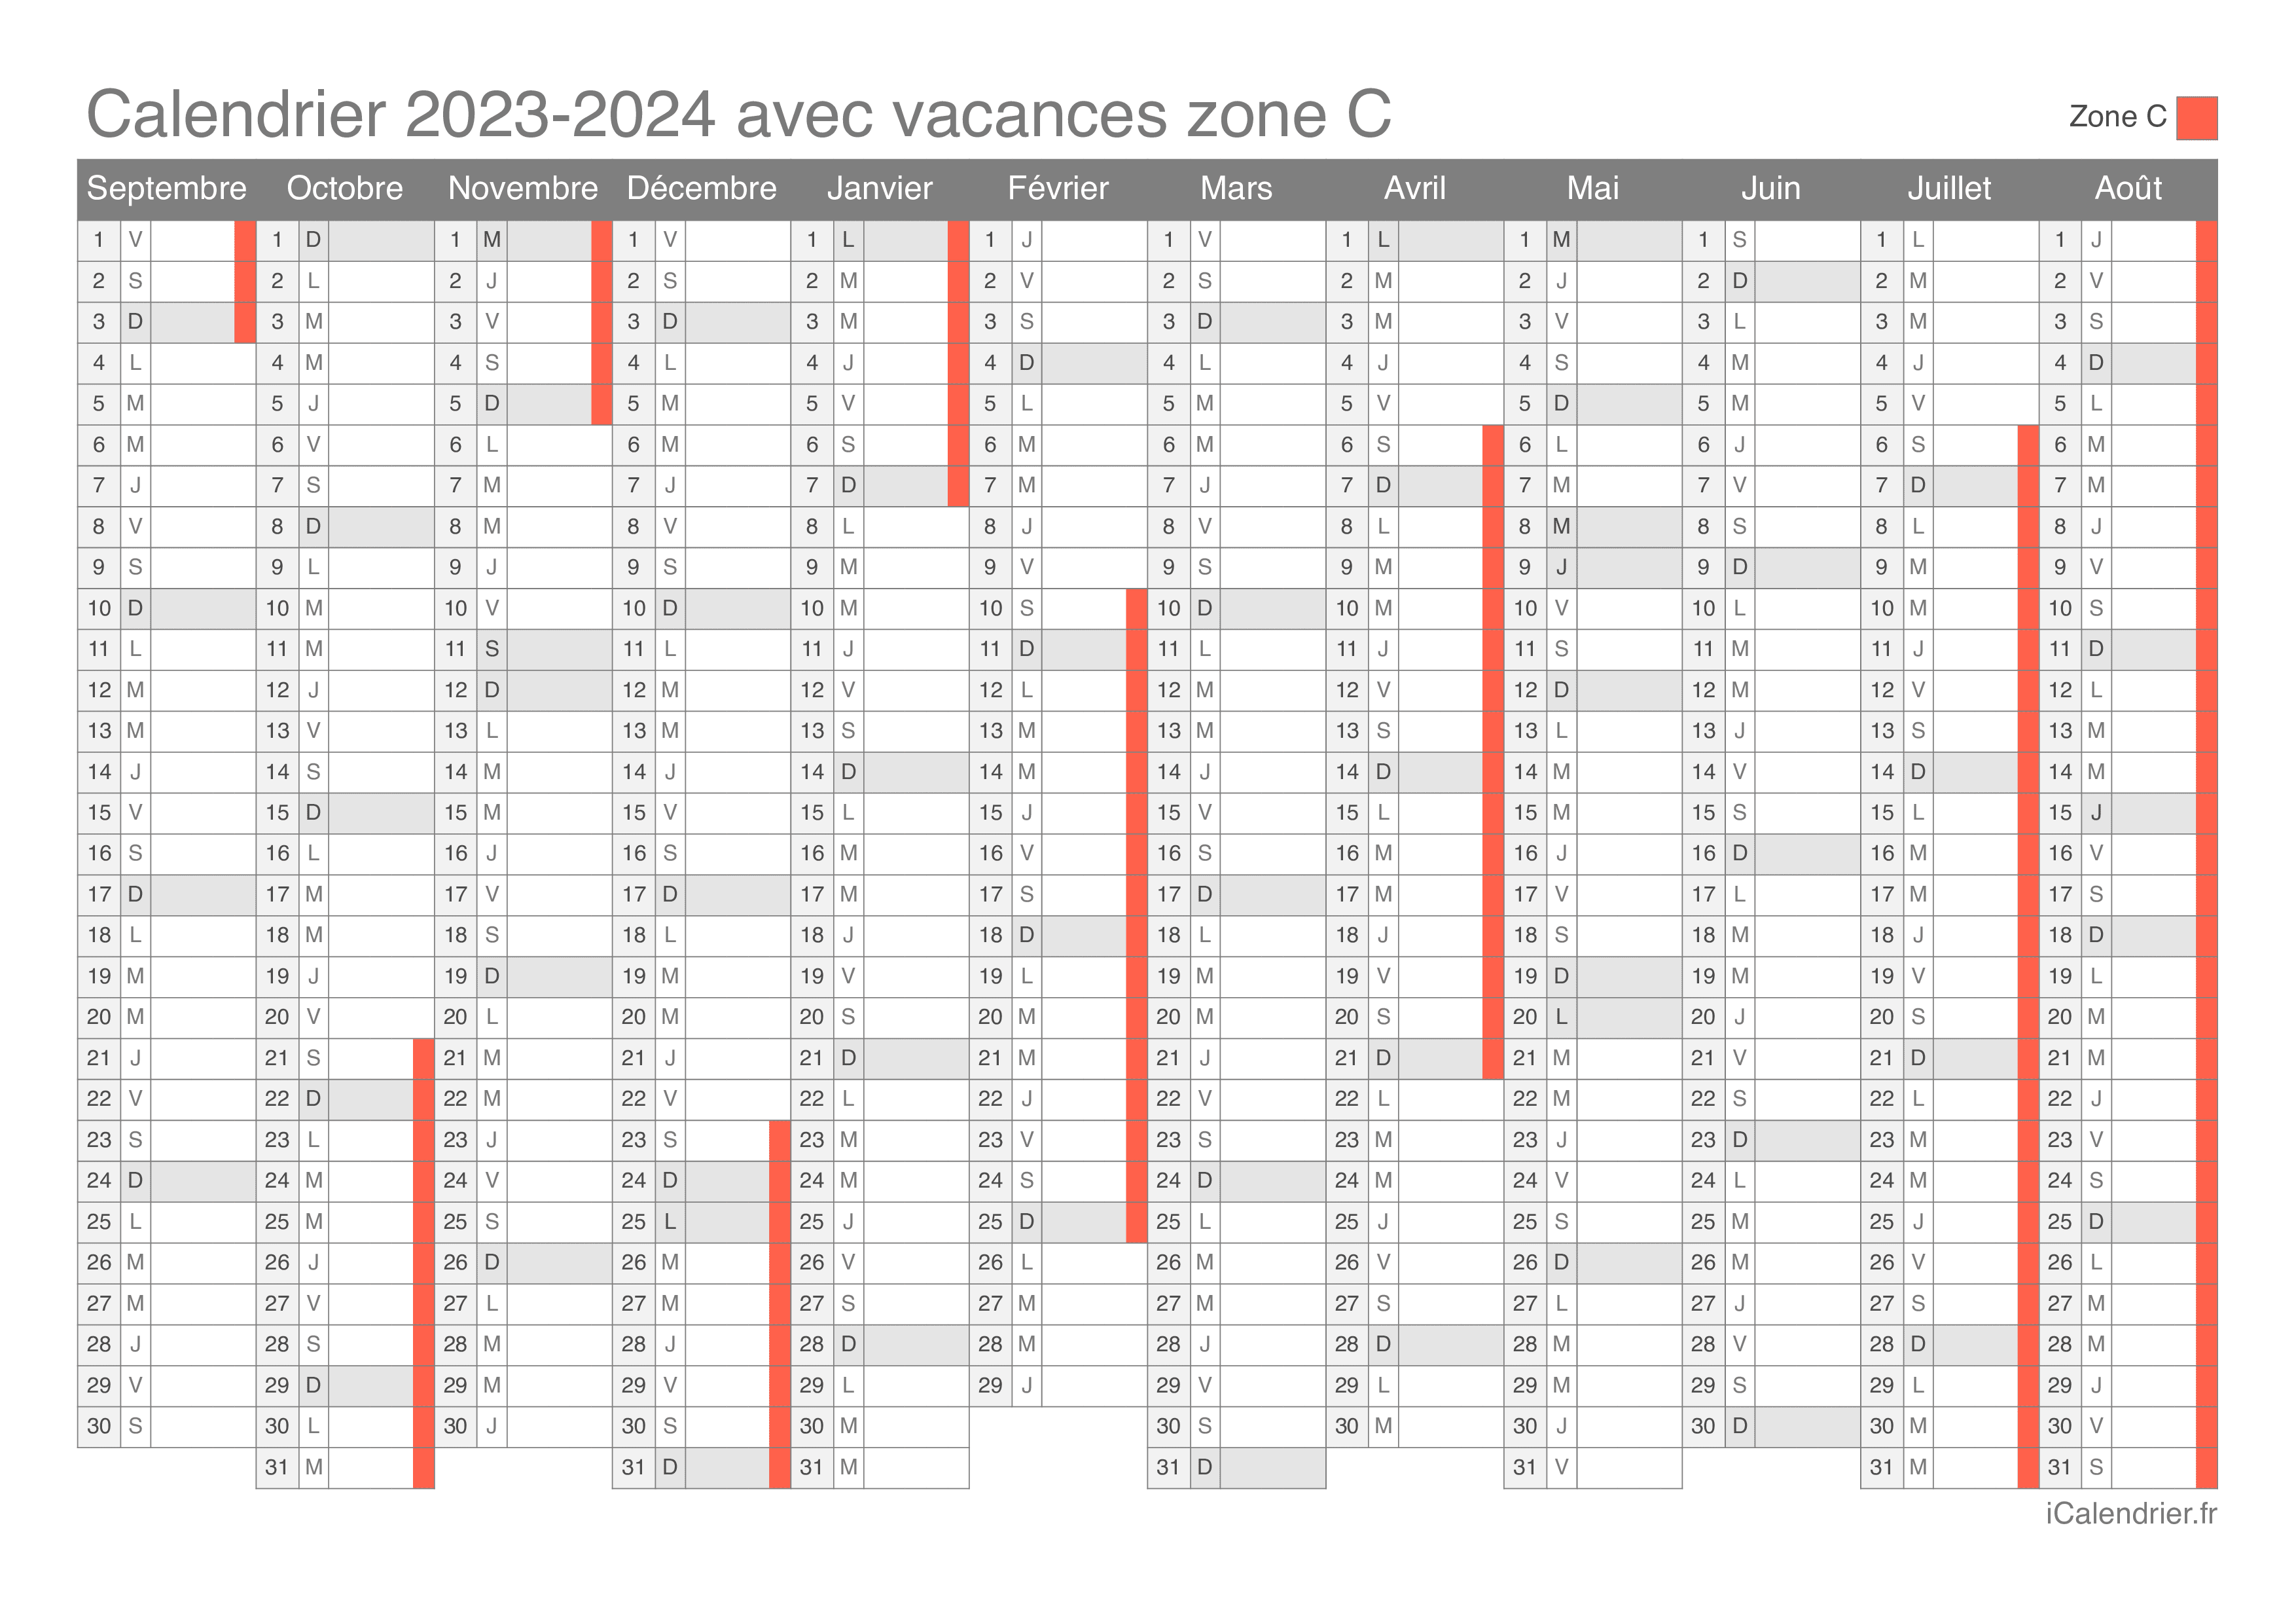 Calendrier scolaire 2023-2024 Excel, Word et PDF - Calendarpedia